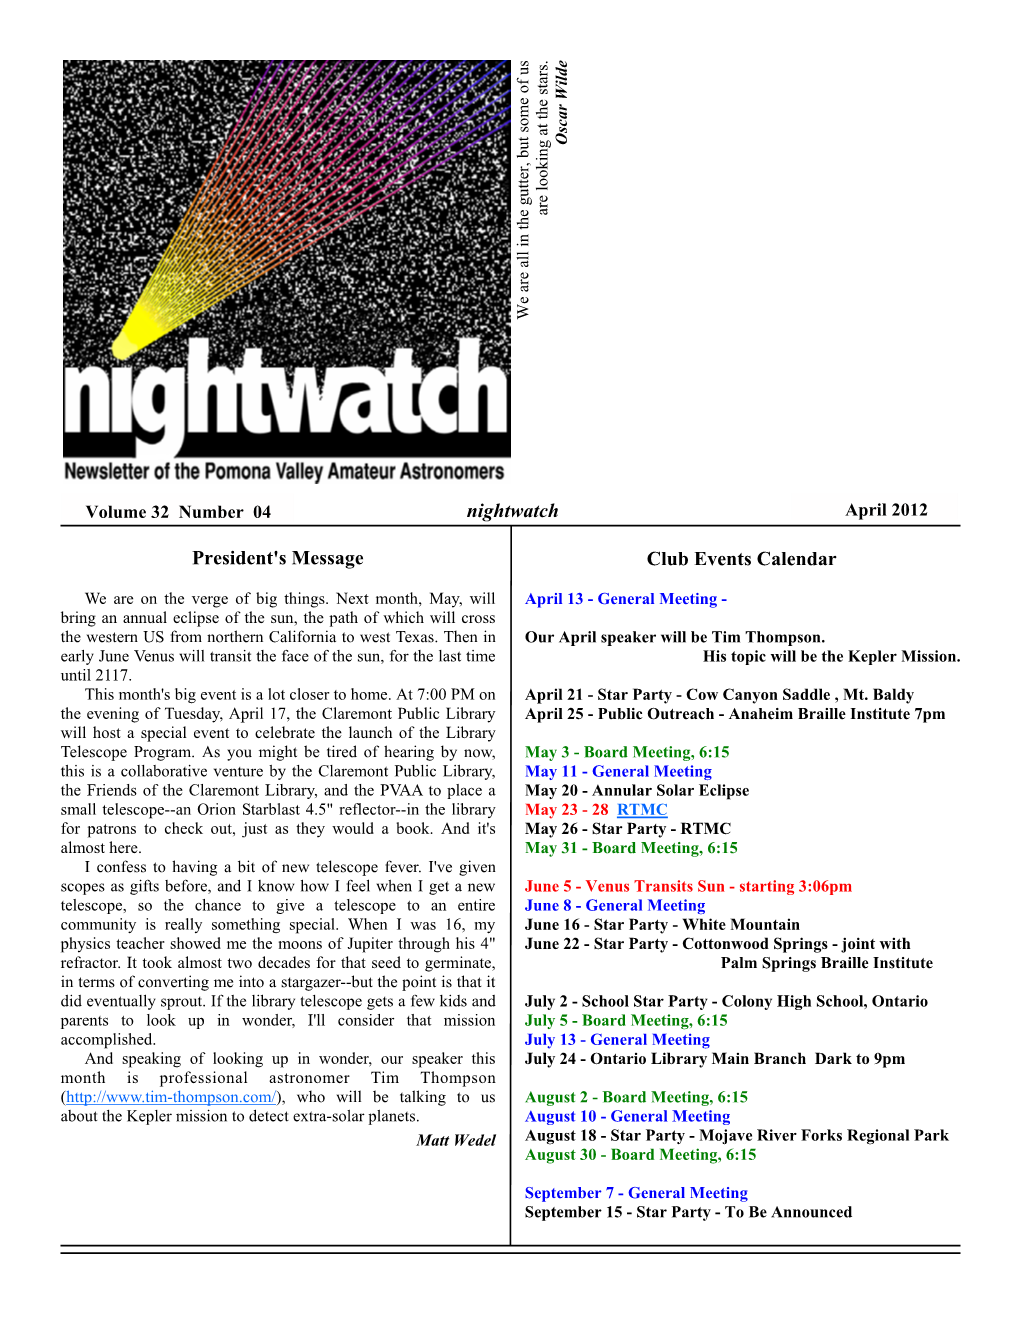 Nightwatch Club Events Calendar President's Message